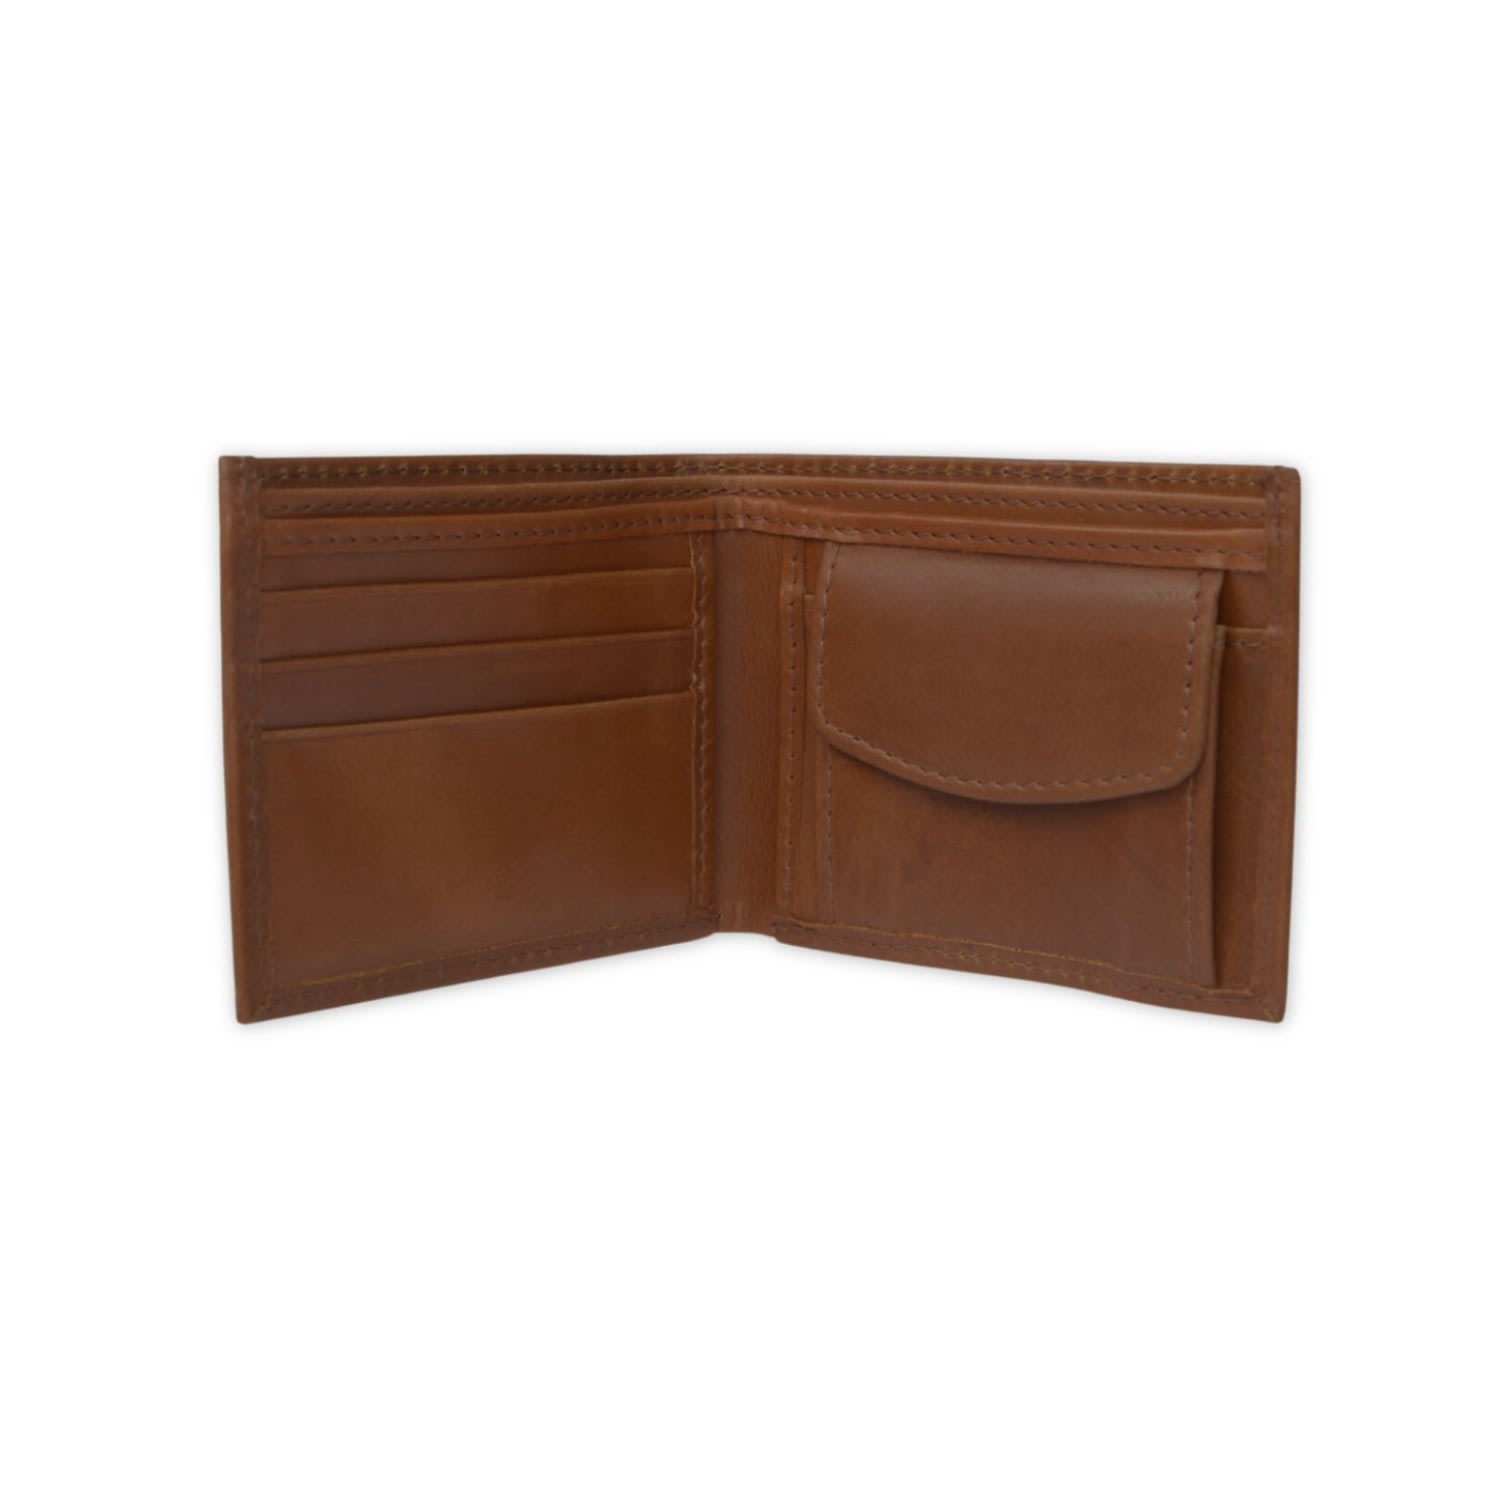 Vida Vida Men's Classic Dark Brown Leather Wallet With Coin Pocket